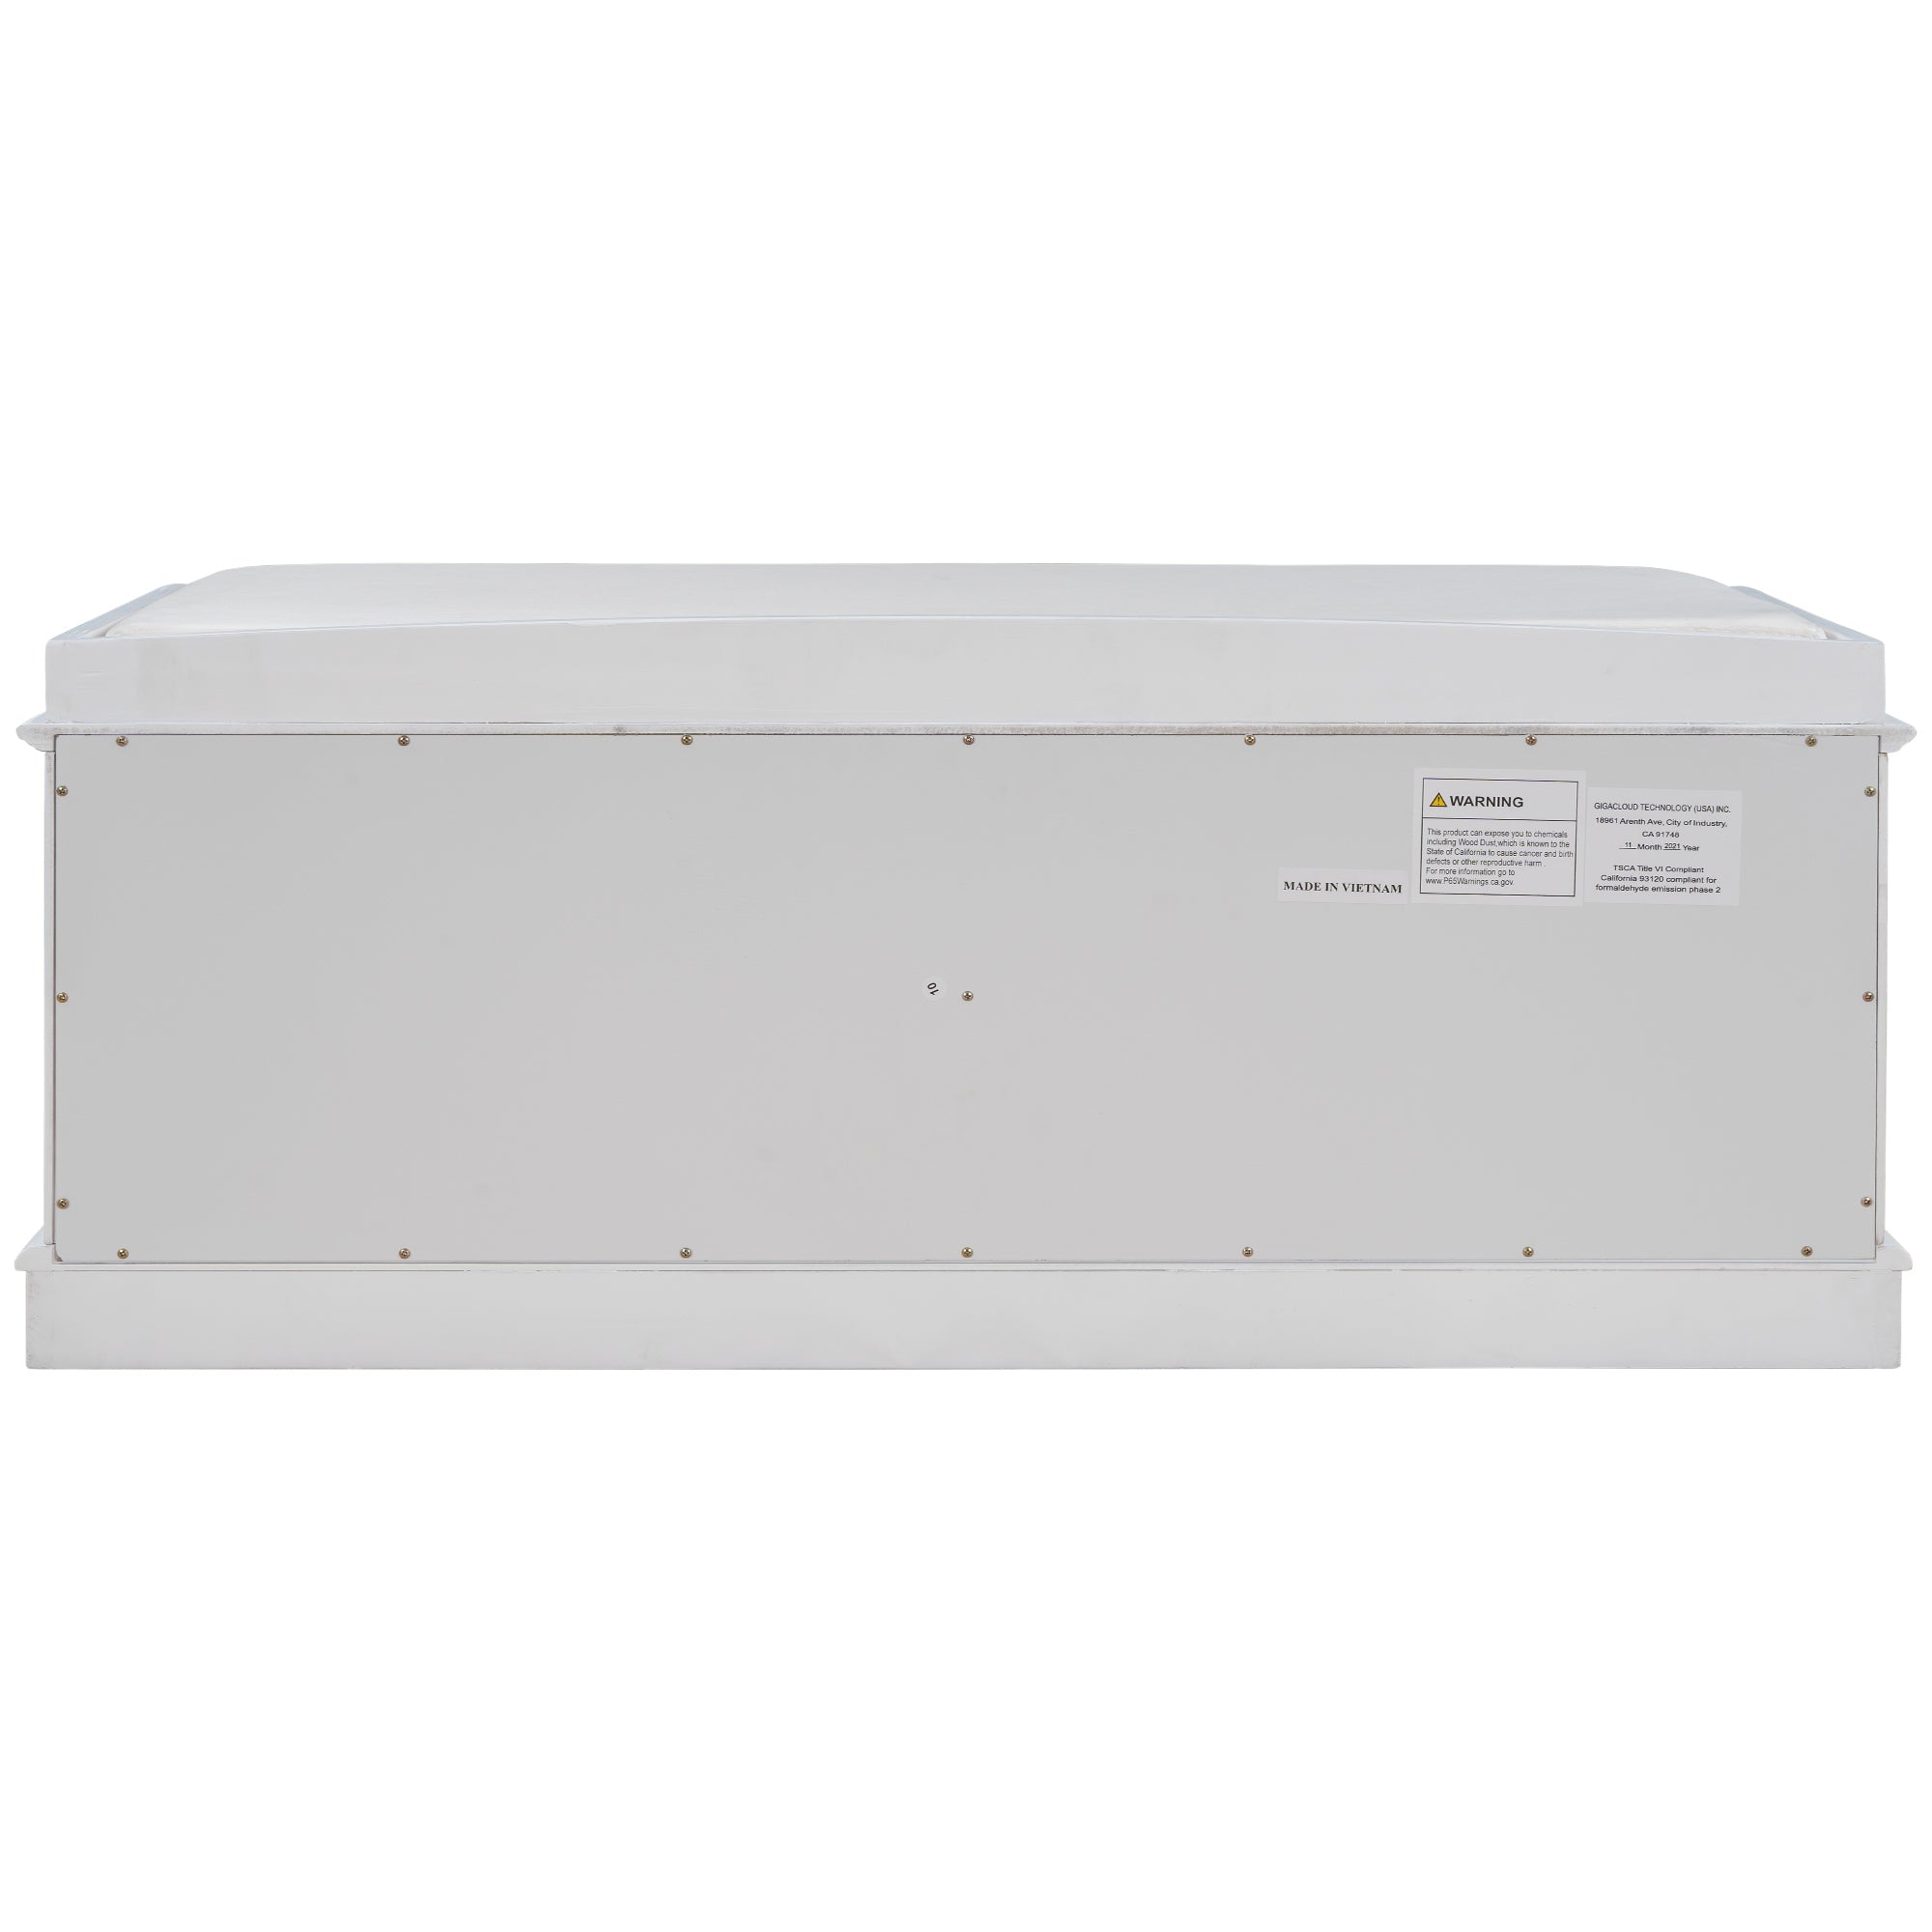 TREXM Storage Bench with Adjustable Shelves (White)